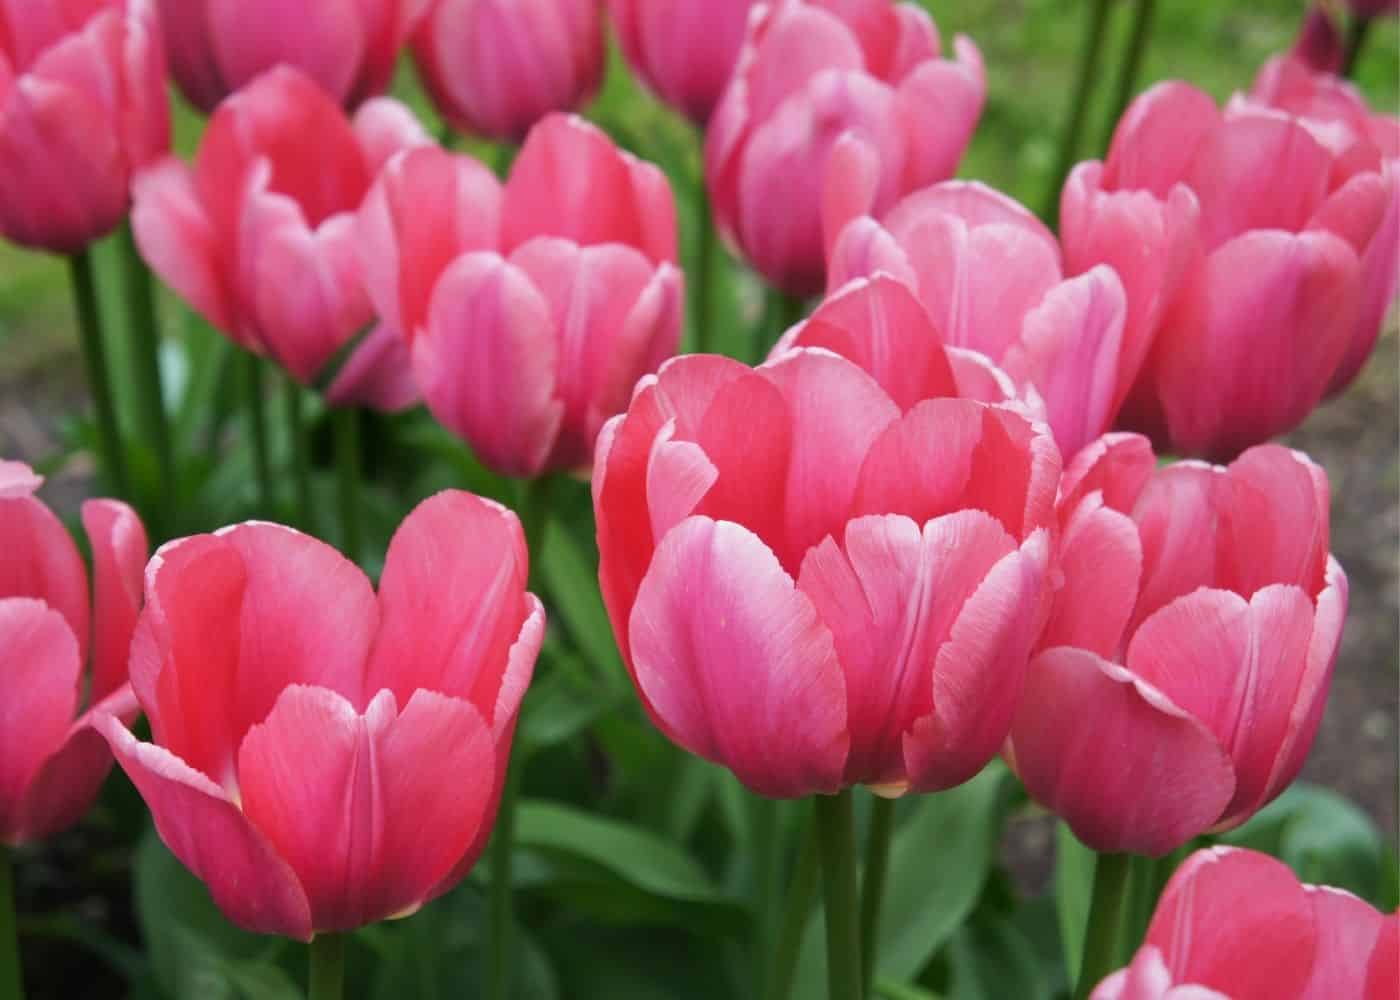 Varieties of tulips - pink impression